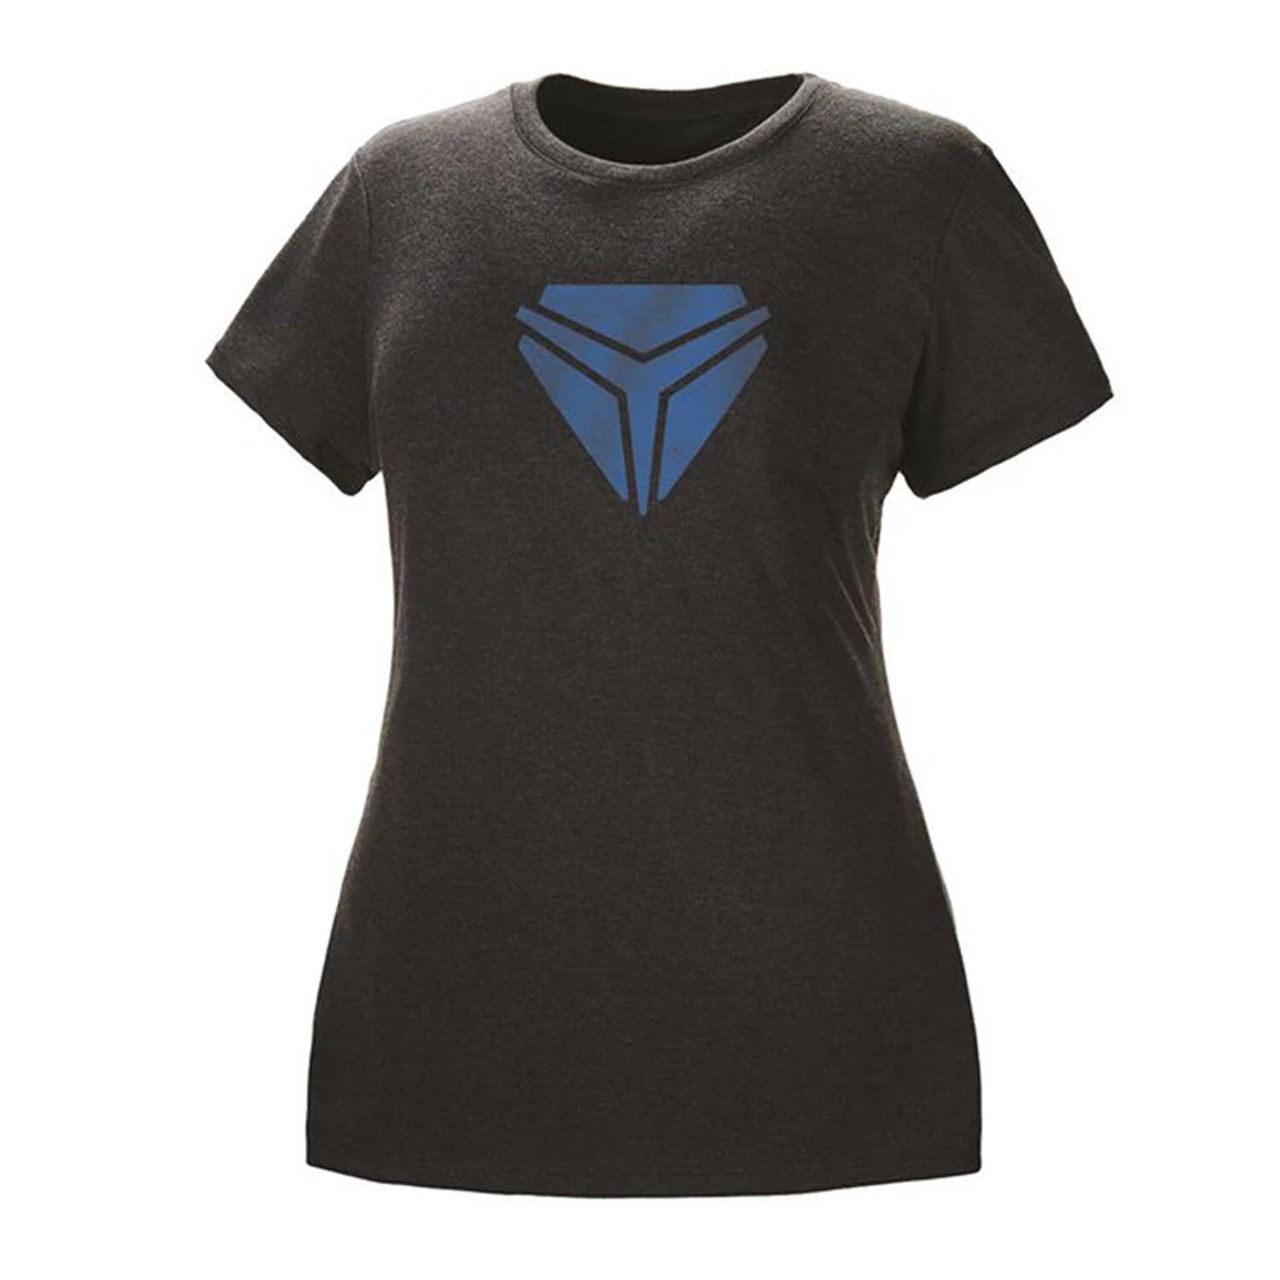 Polaris New OEM Women’s Vintage Graphic T-Shirt with Slingshot Shield, 286791403